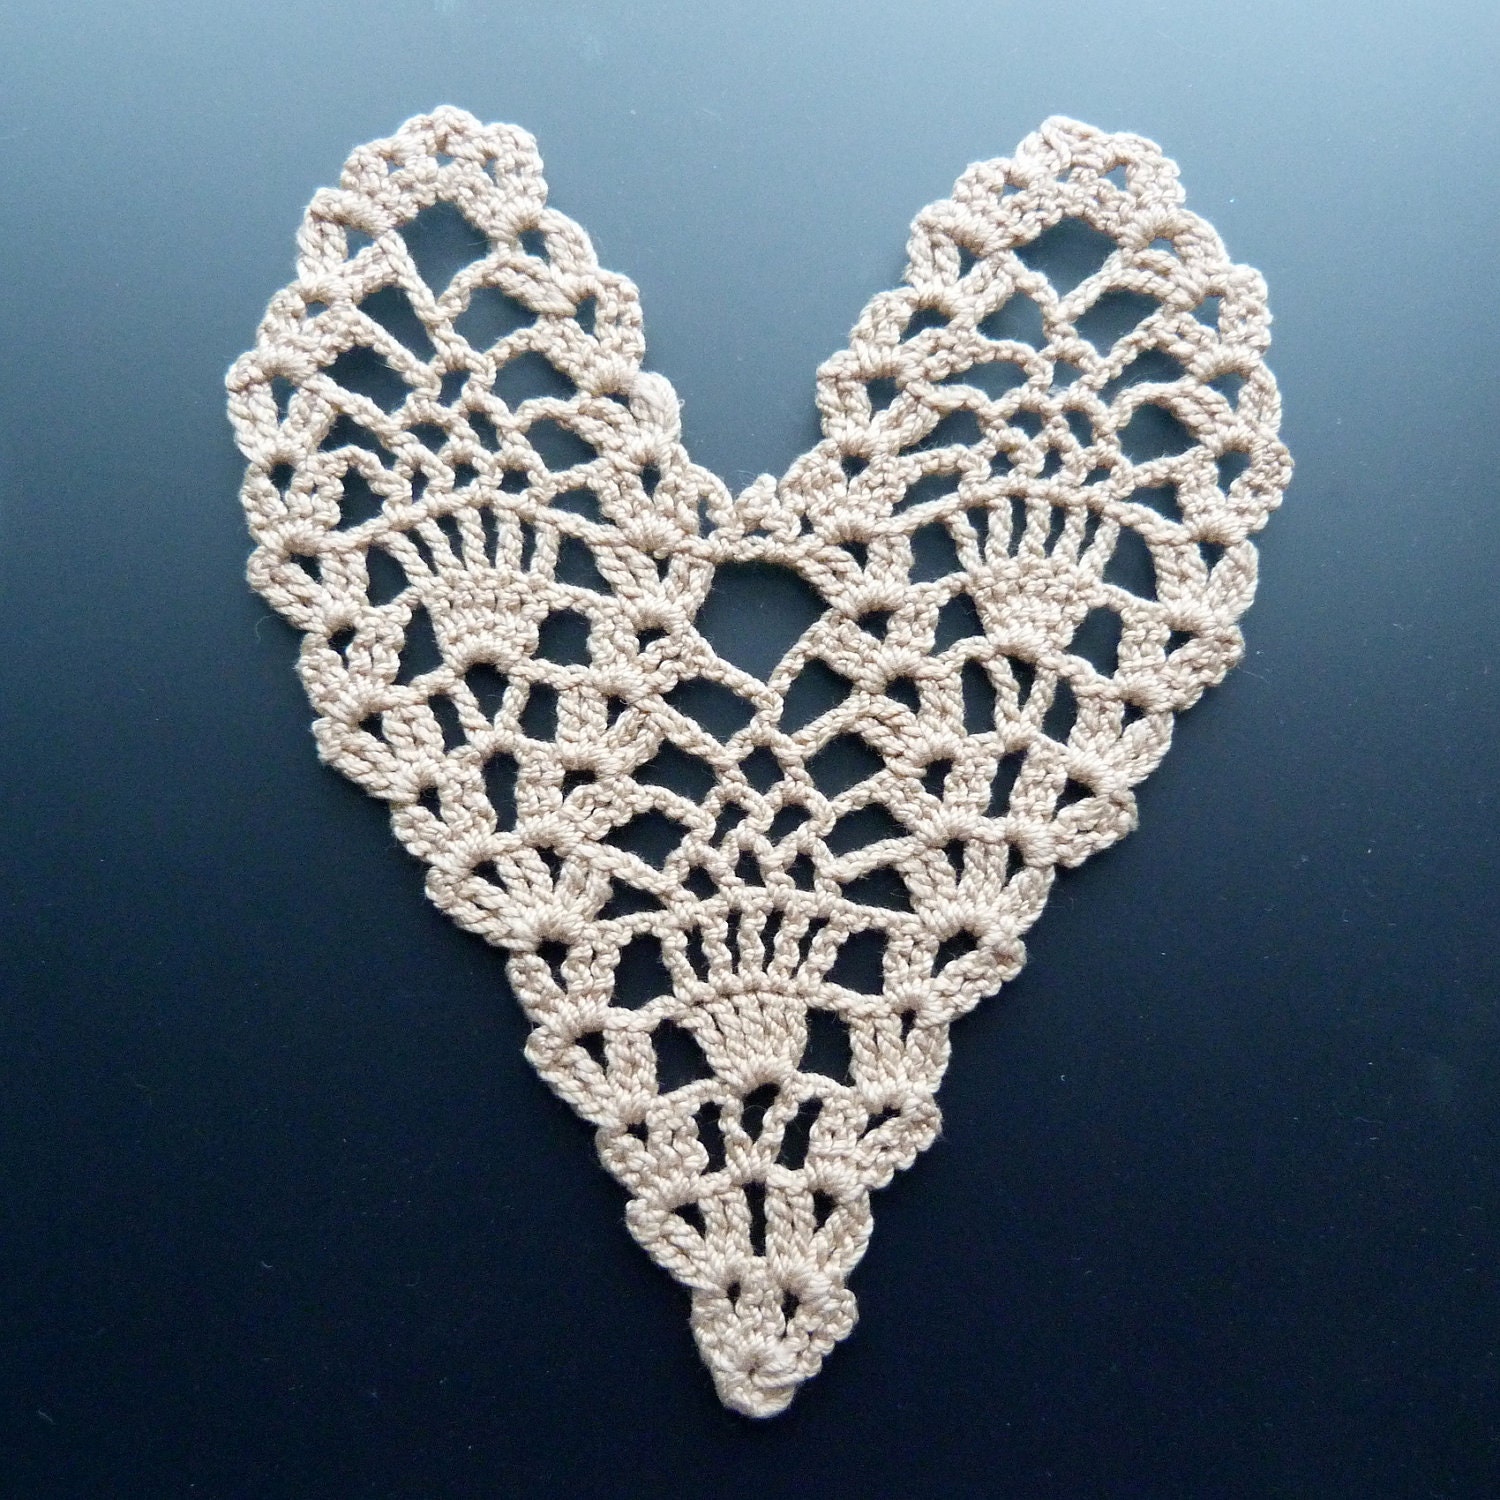 Crocheted Doily - The Heart